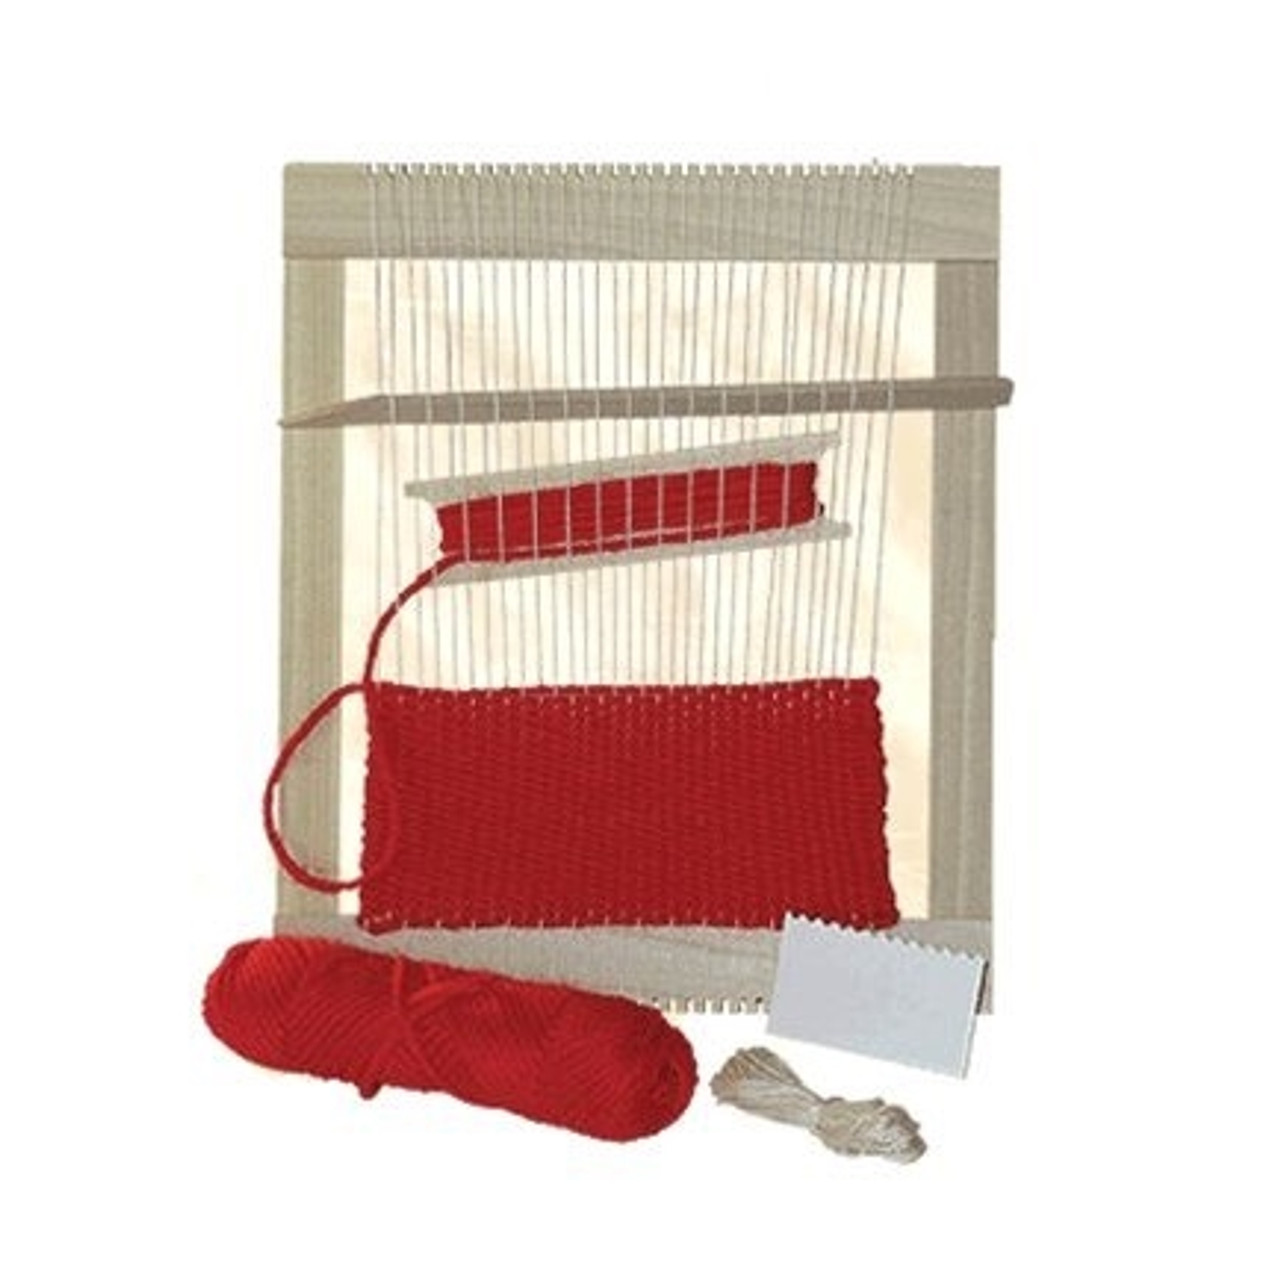 Lap Loom Kit – A Toy Garden